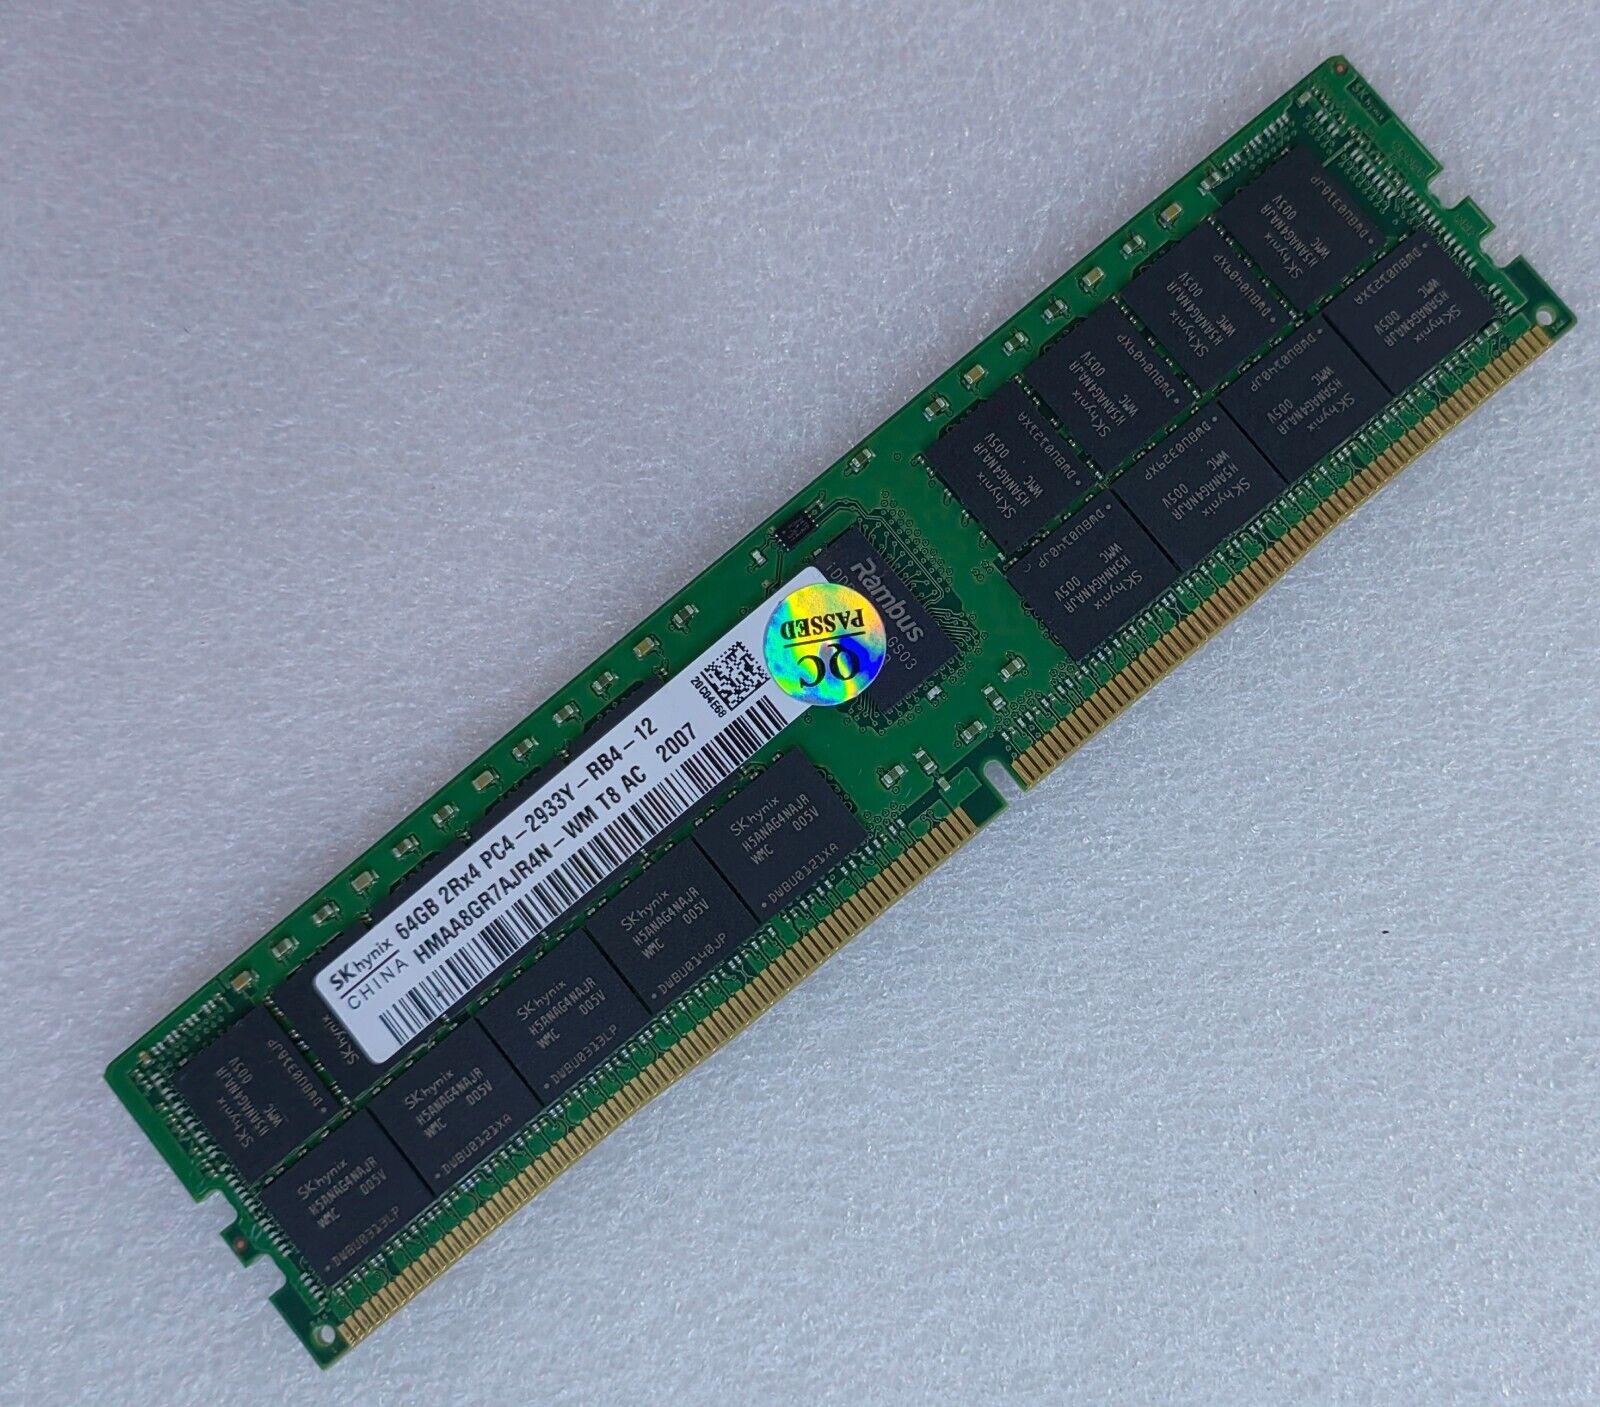 SK hynix 64GB DDR4 3200MHz 2933MHz 2666MHz 2400MHz Server RAM 2Rx4 4DRx4 RDIMM